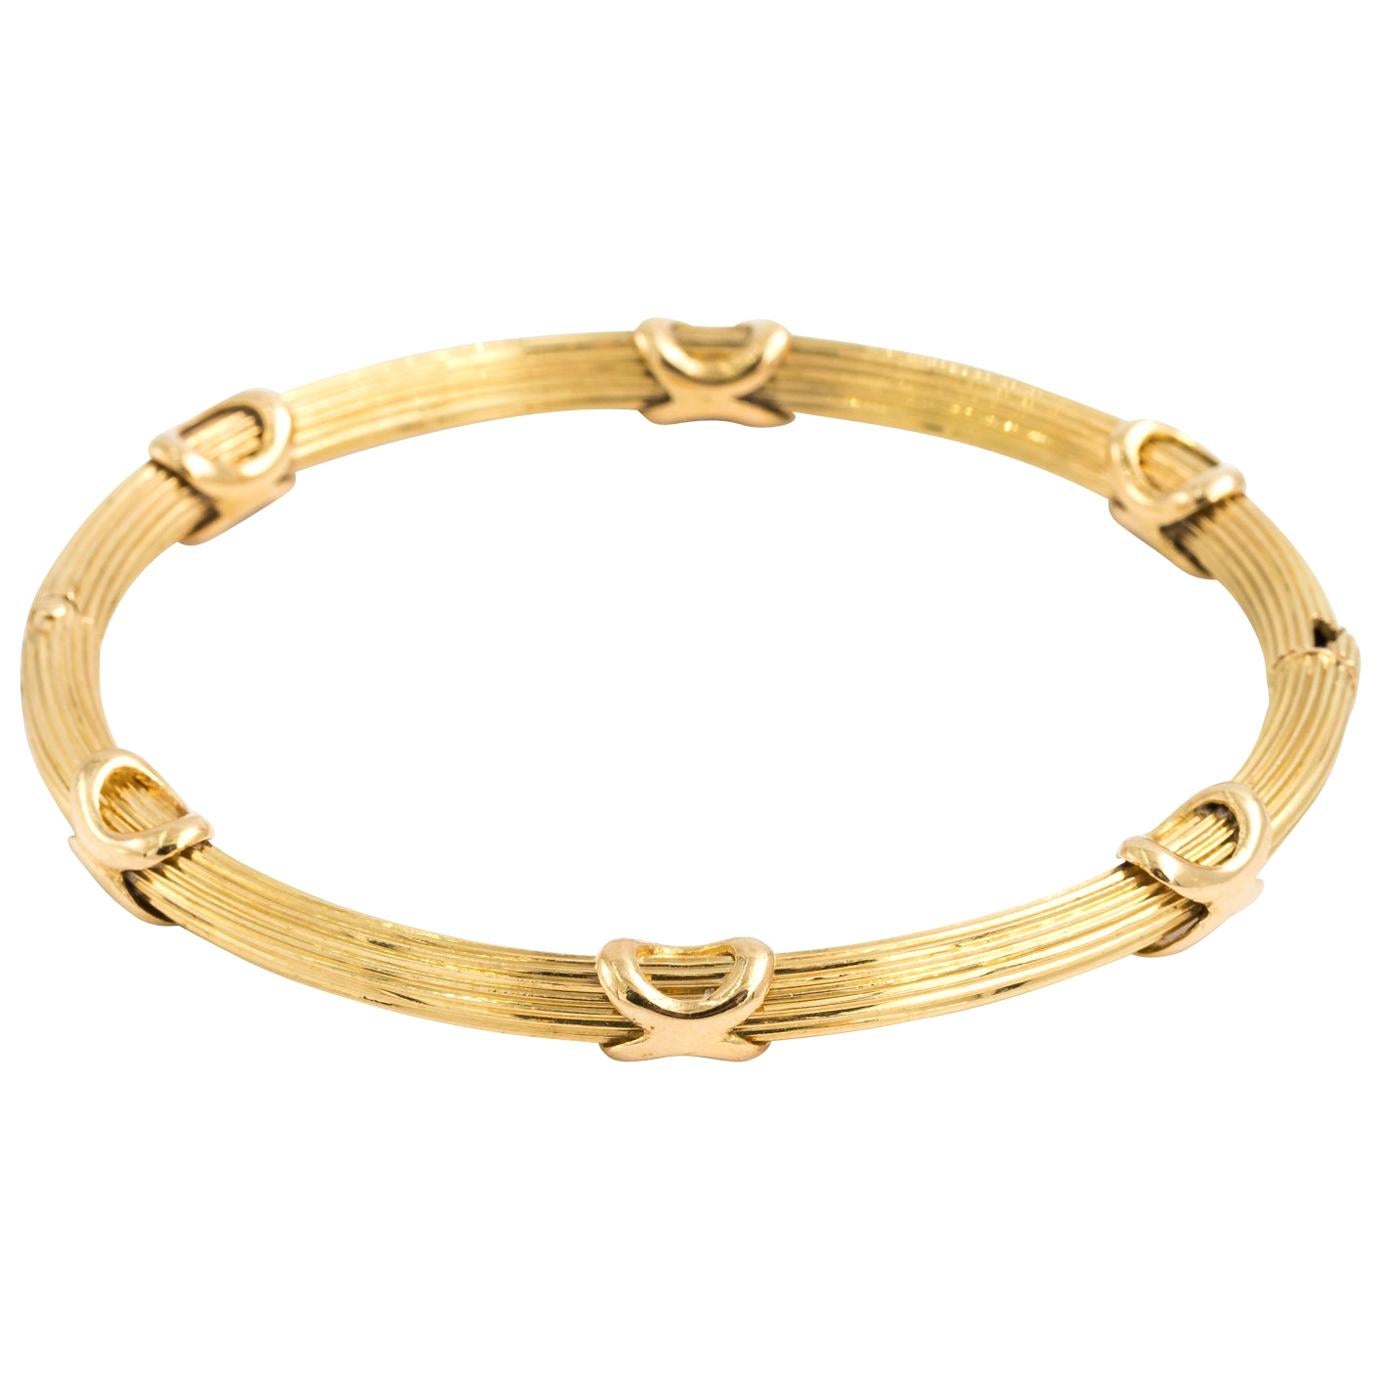 18 Karat Gold Bangle Bracelet